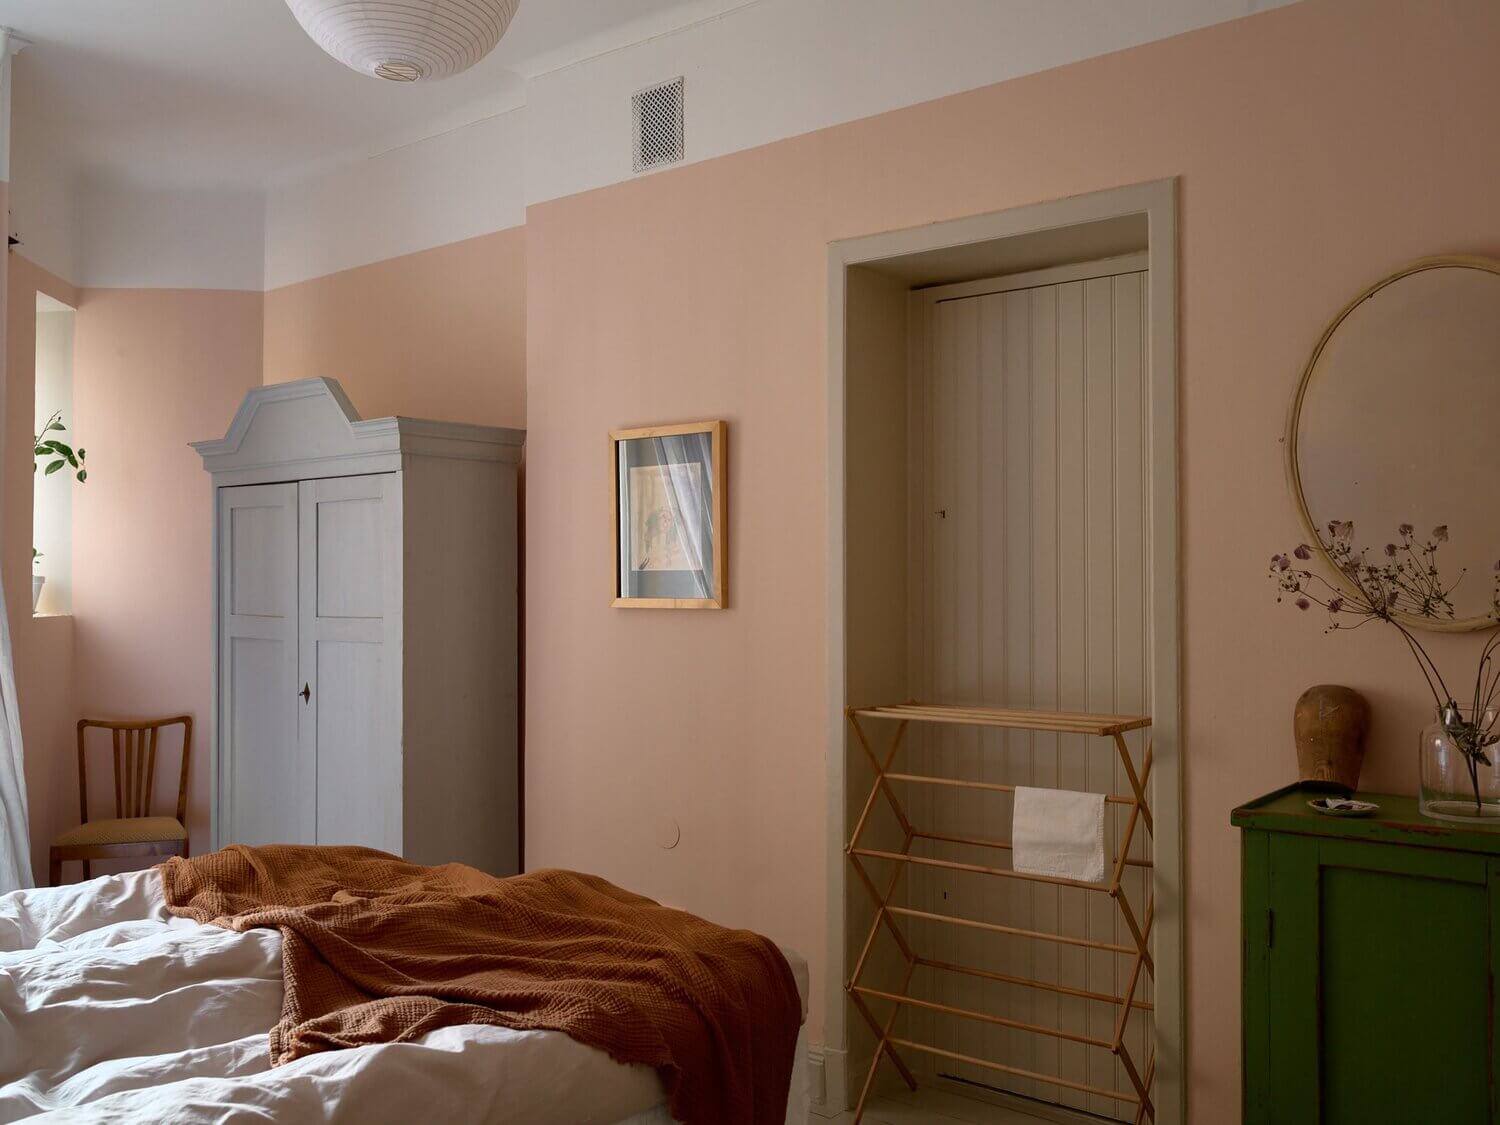 AScandinavianApartmentPaintedInSoftColorTones TheNordroom17 A Scandinavian Apartment Painted In Pastel Color Tones